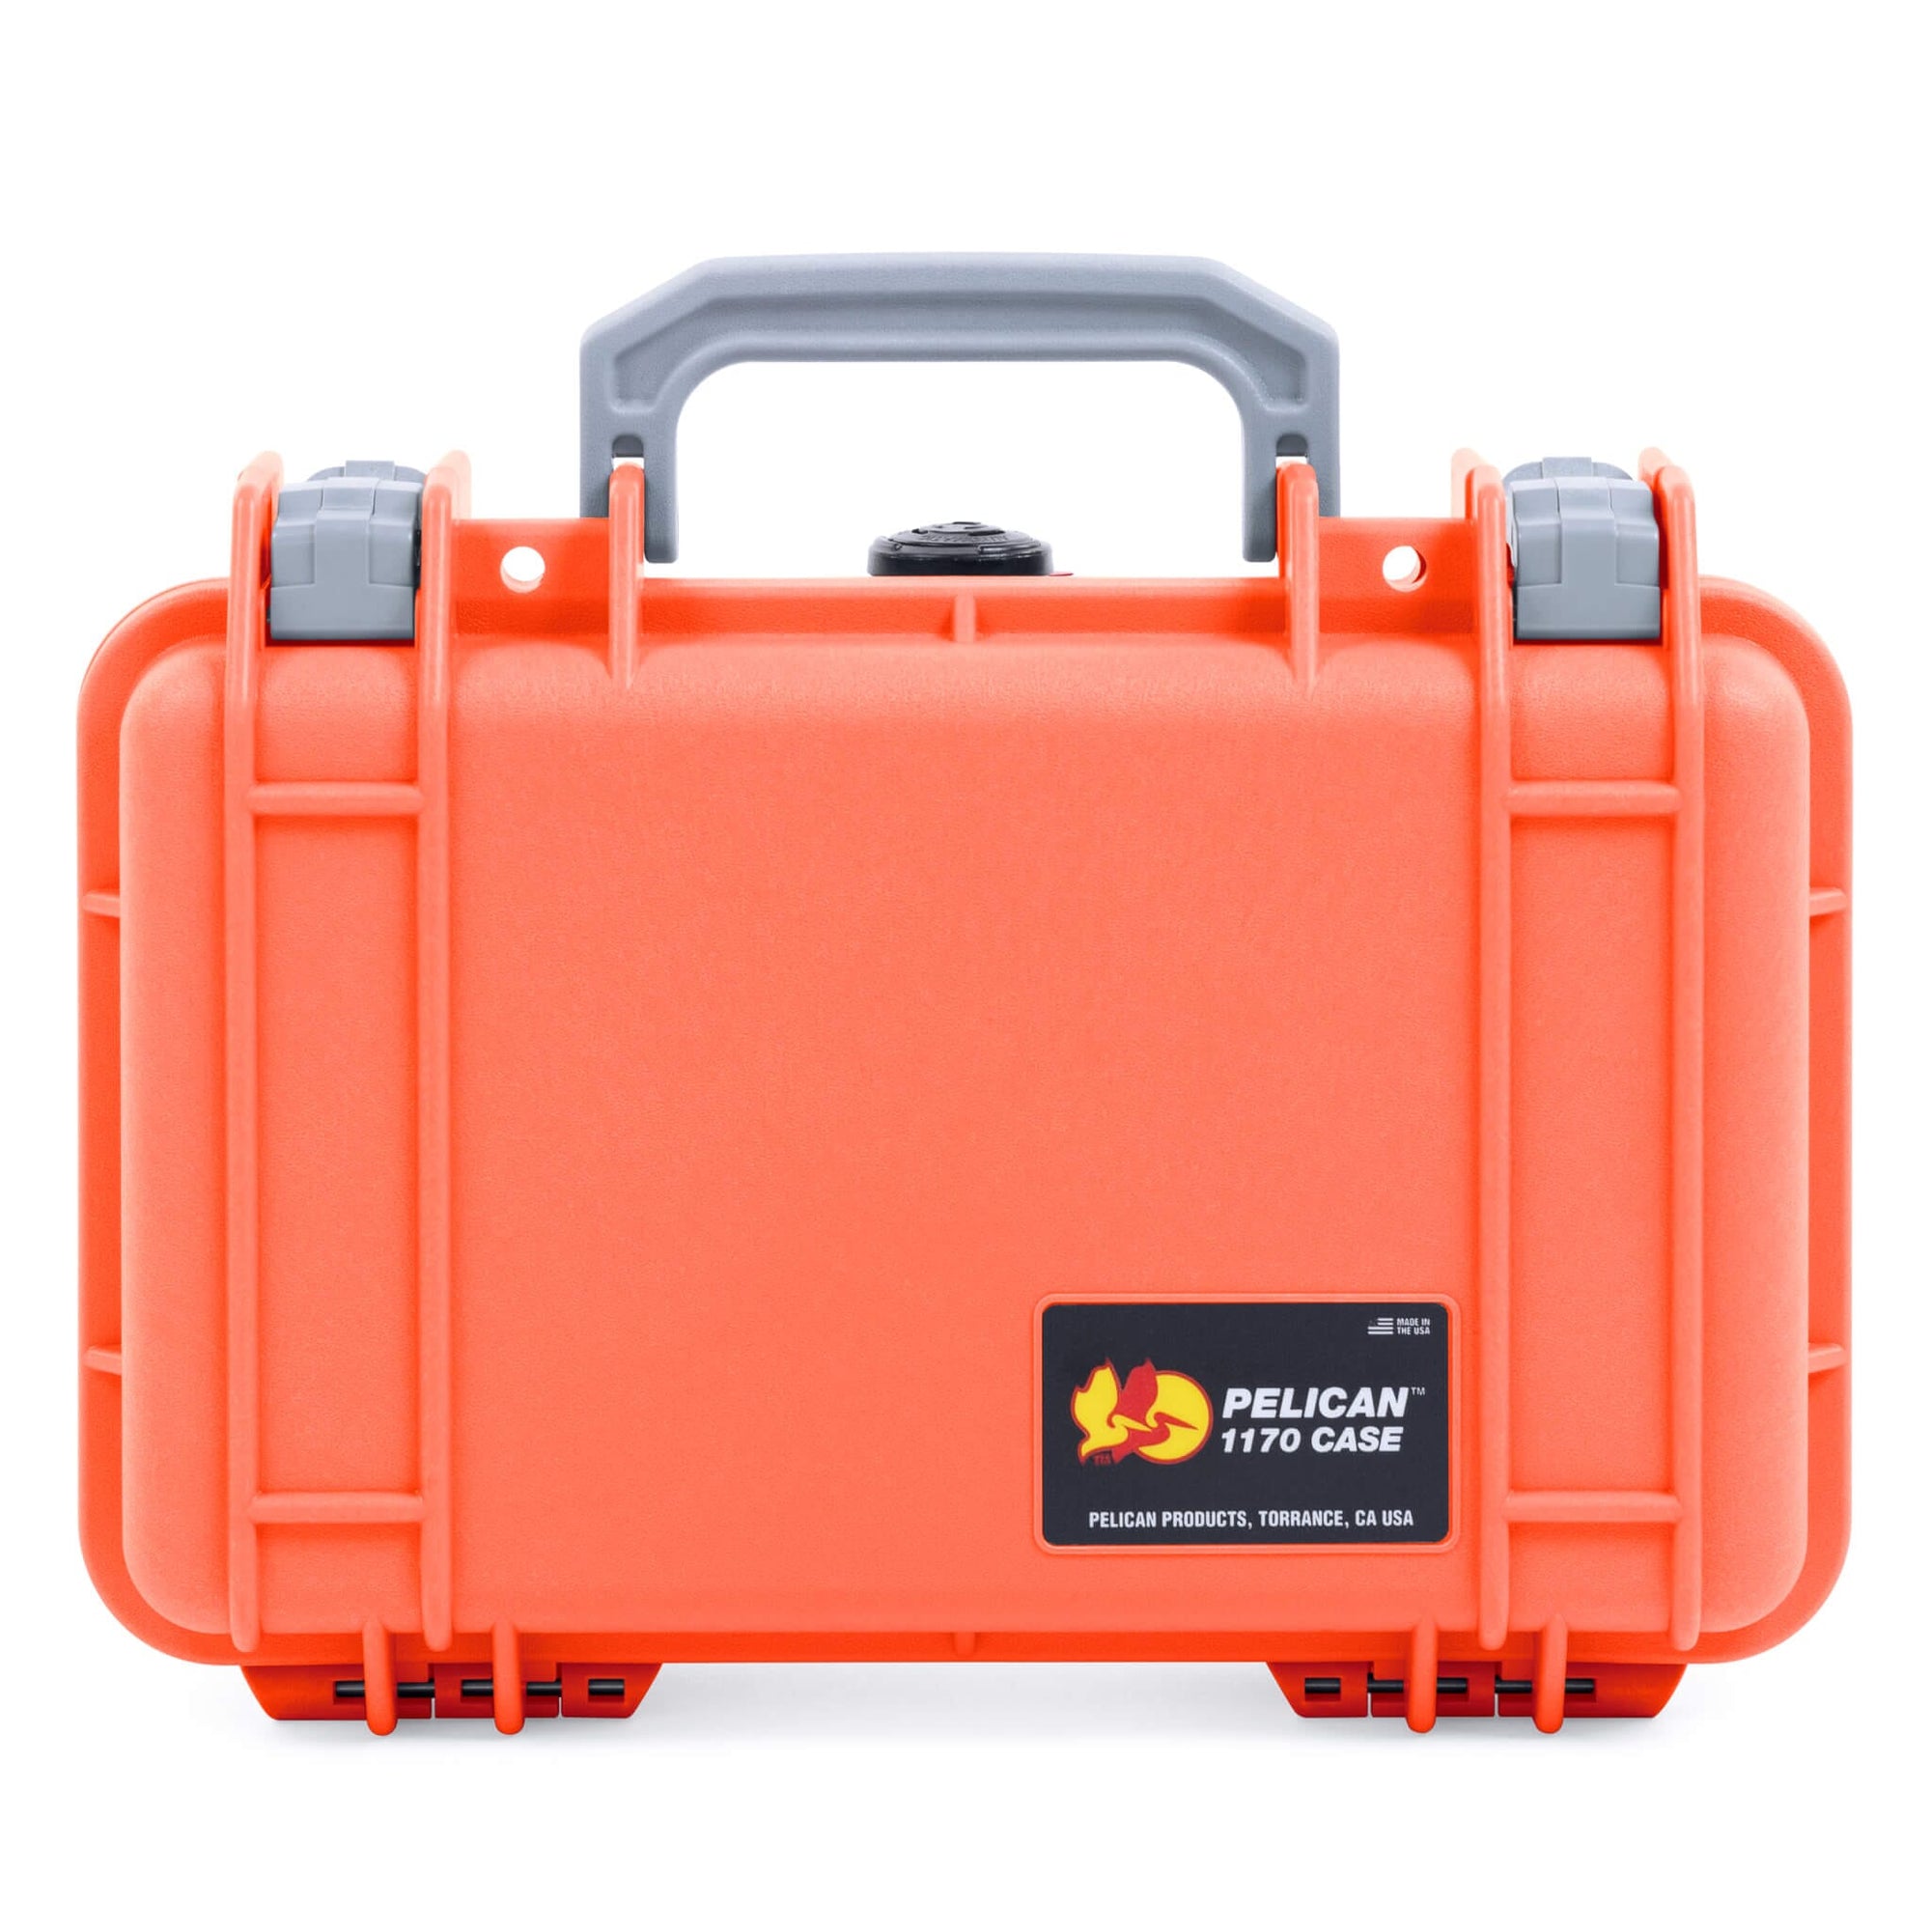 Pelican 1170 Case, Orange with Silver Handle & Latches ColorCase 